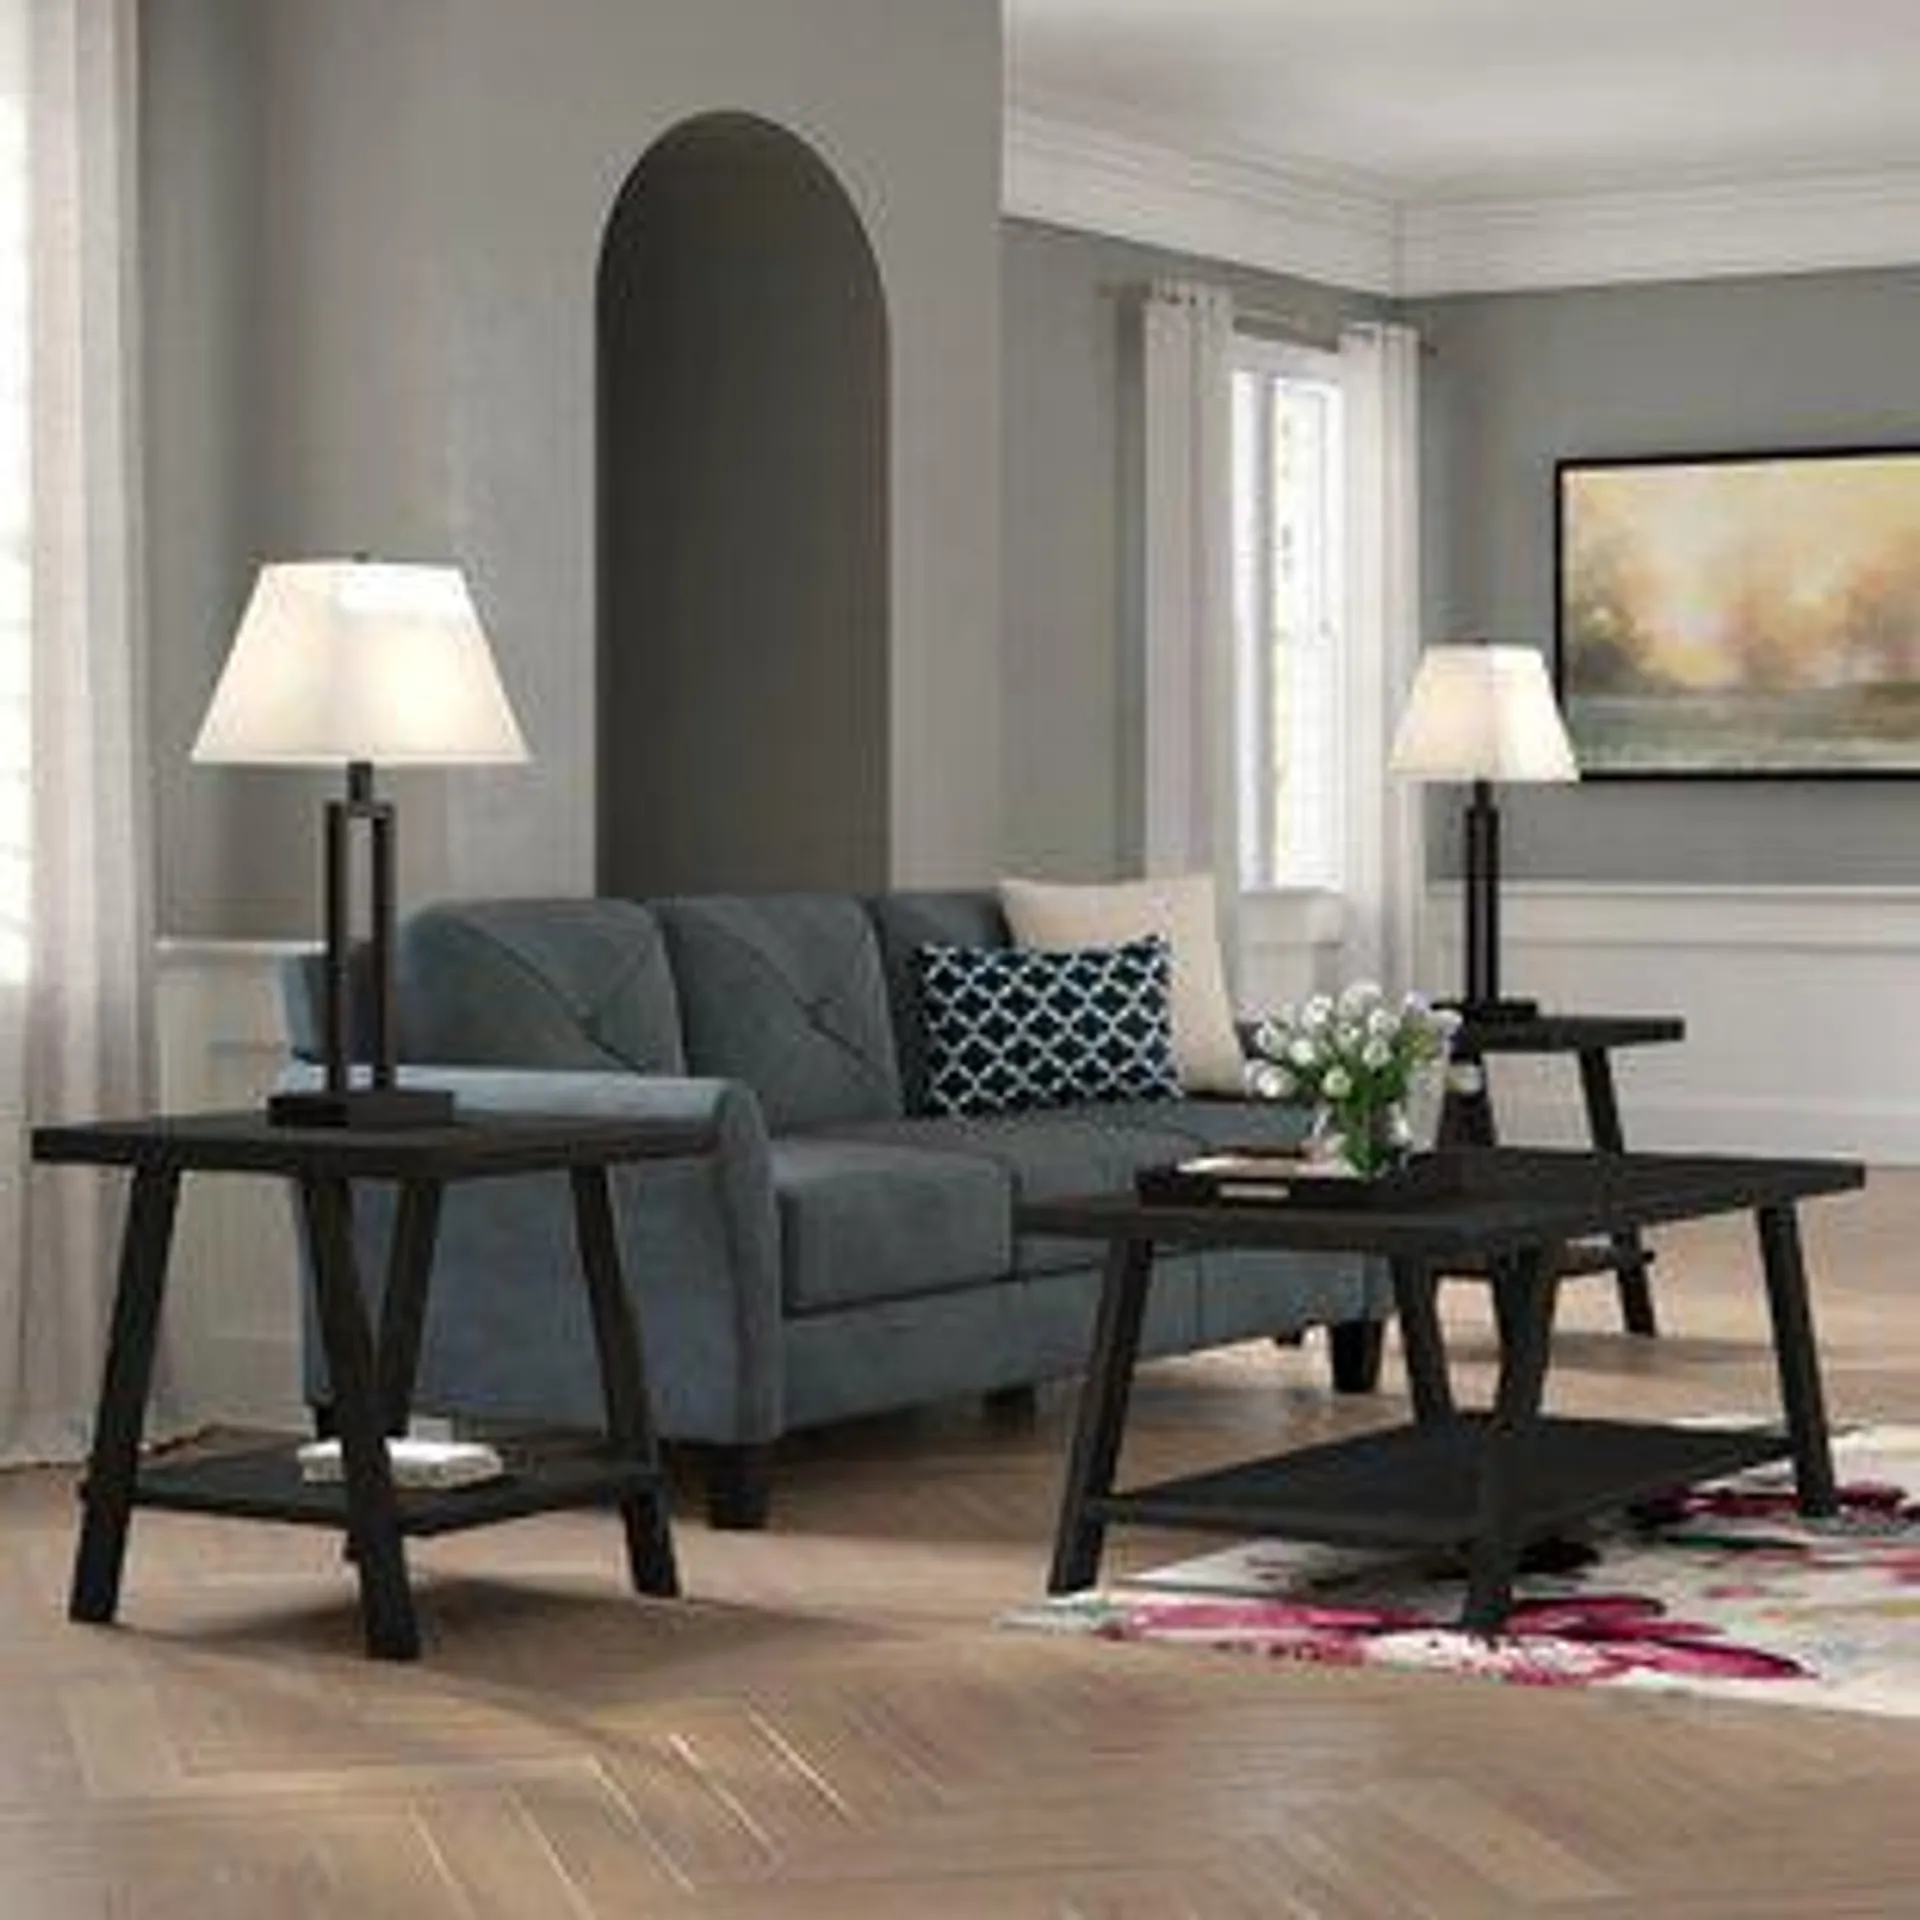 Filipek 3 - Piece Living Room Table Set